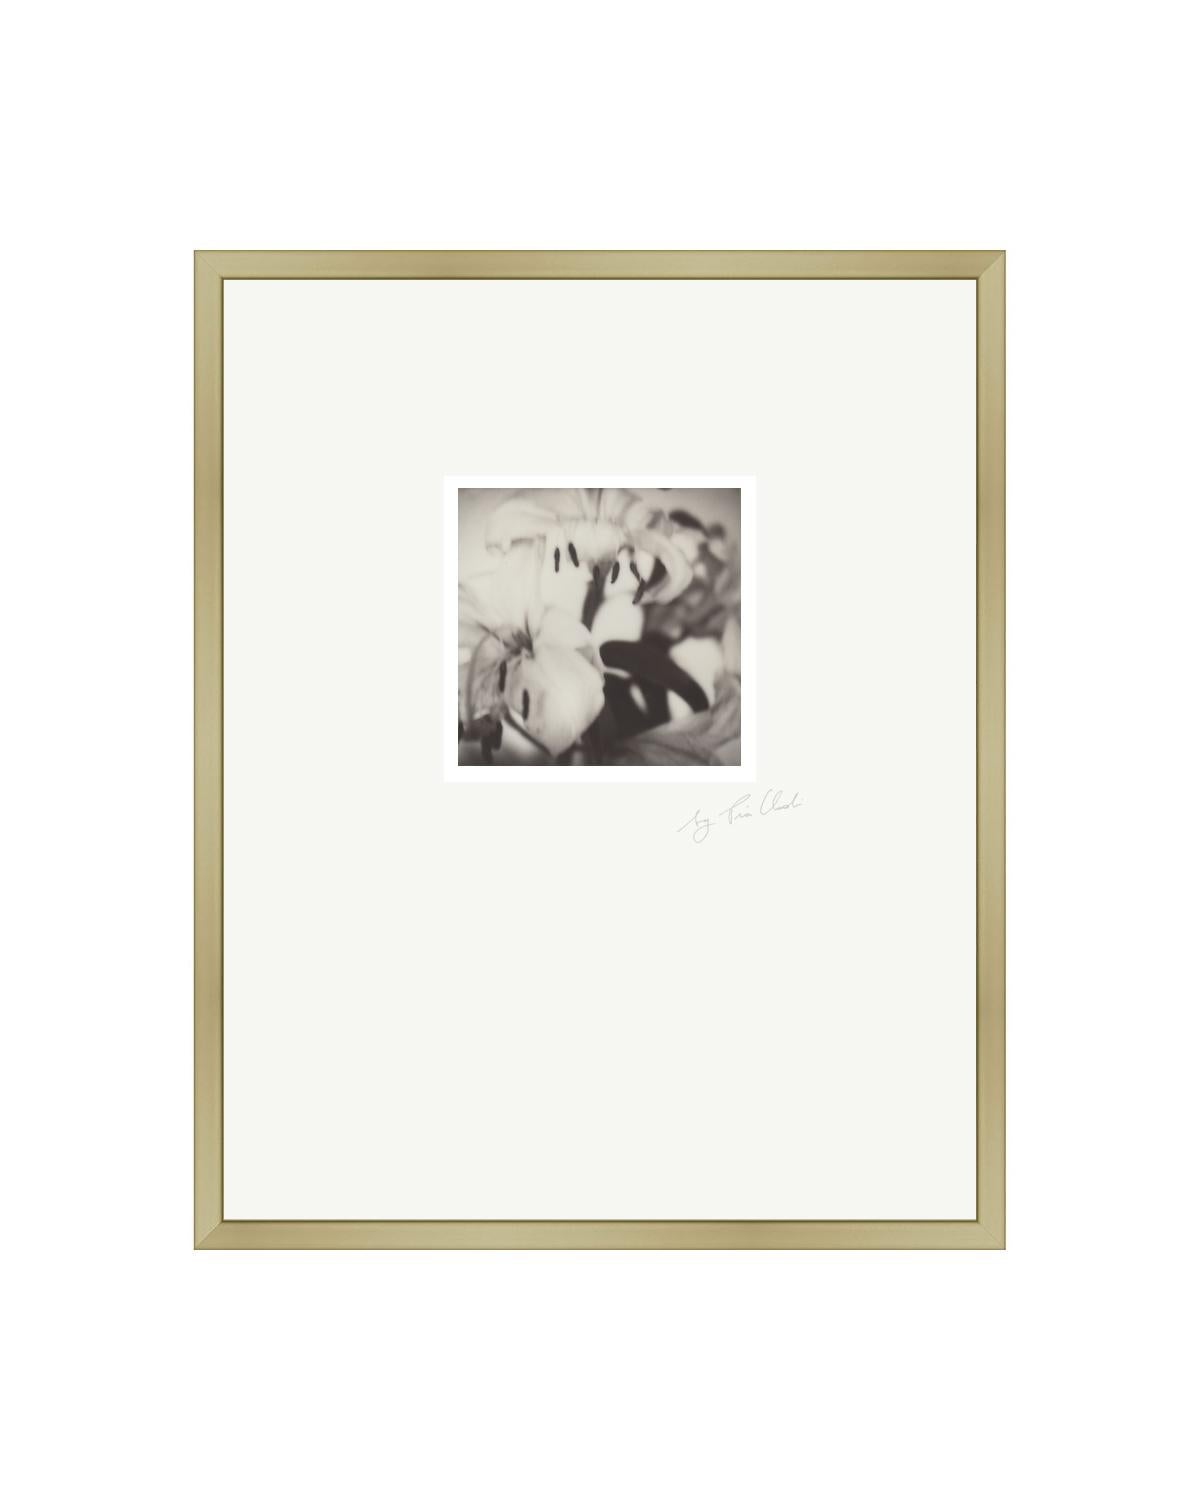 Pia Clodi Landscape Photograph - Past Bloom II - Contemporary Black & White Original Polaroid Photograph Framed